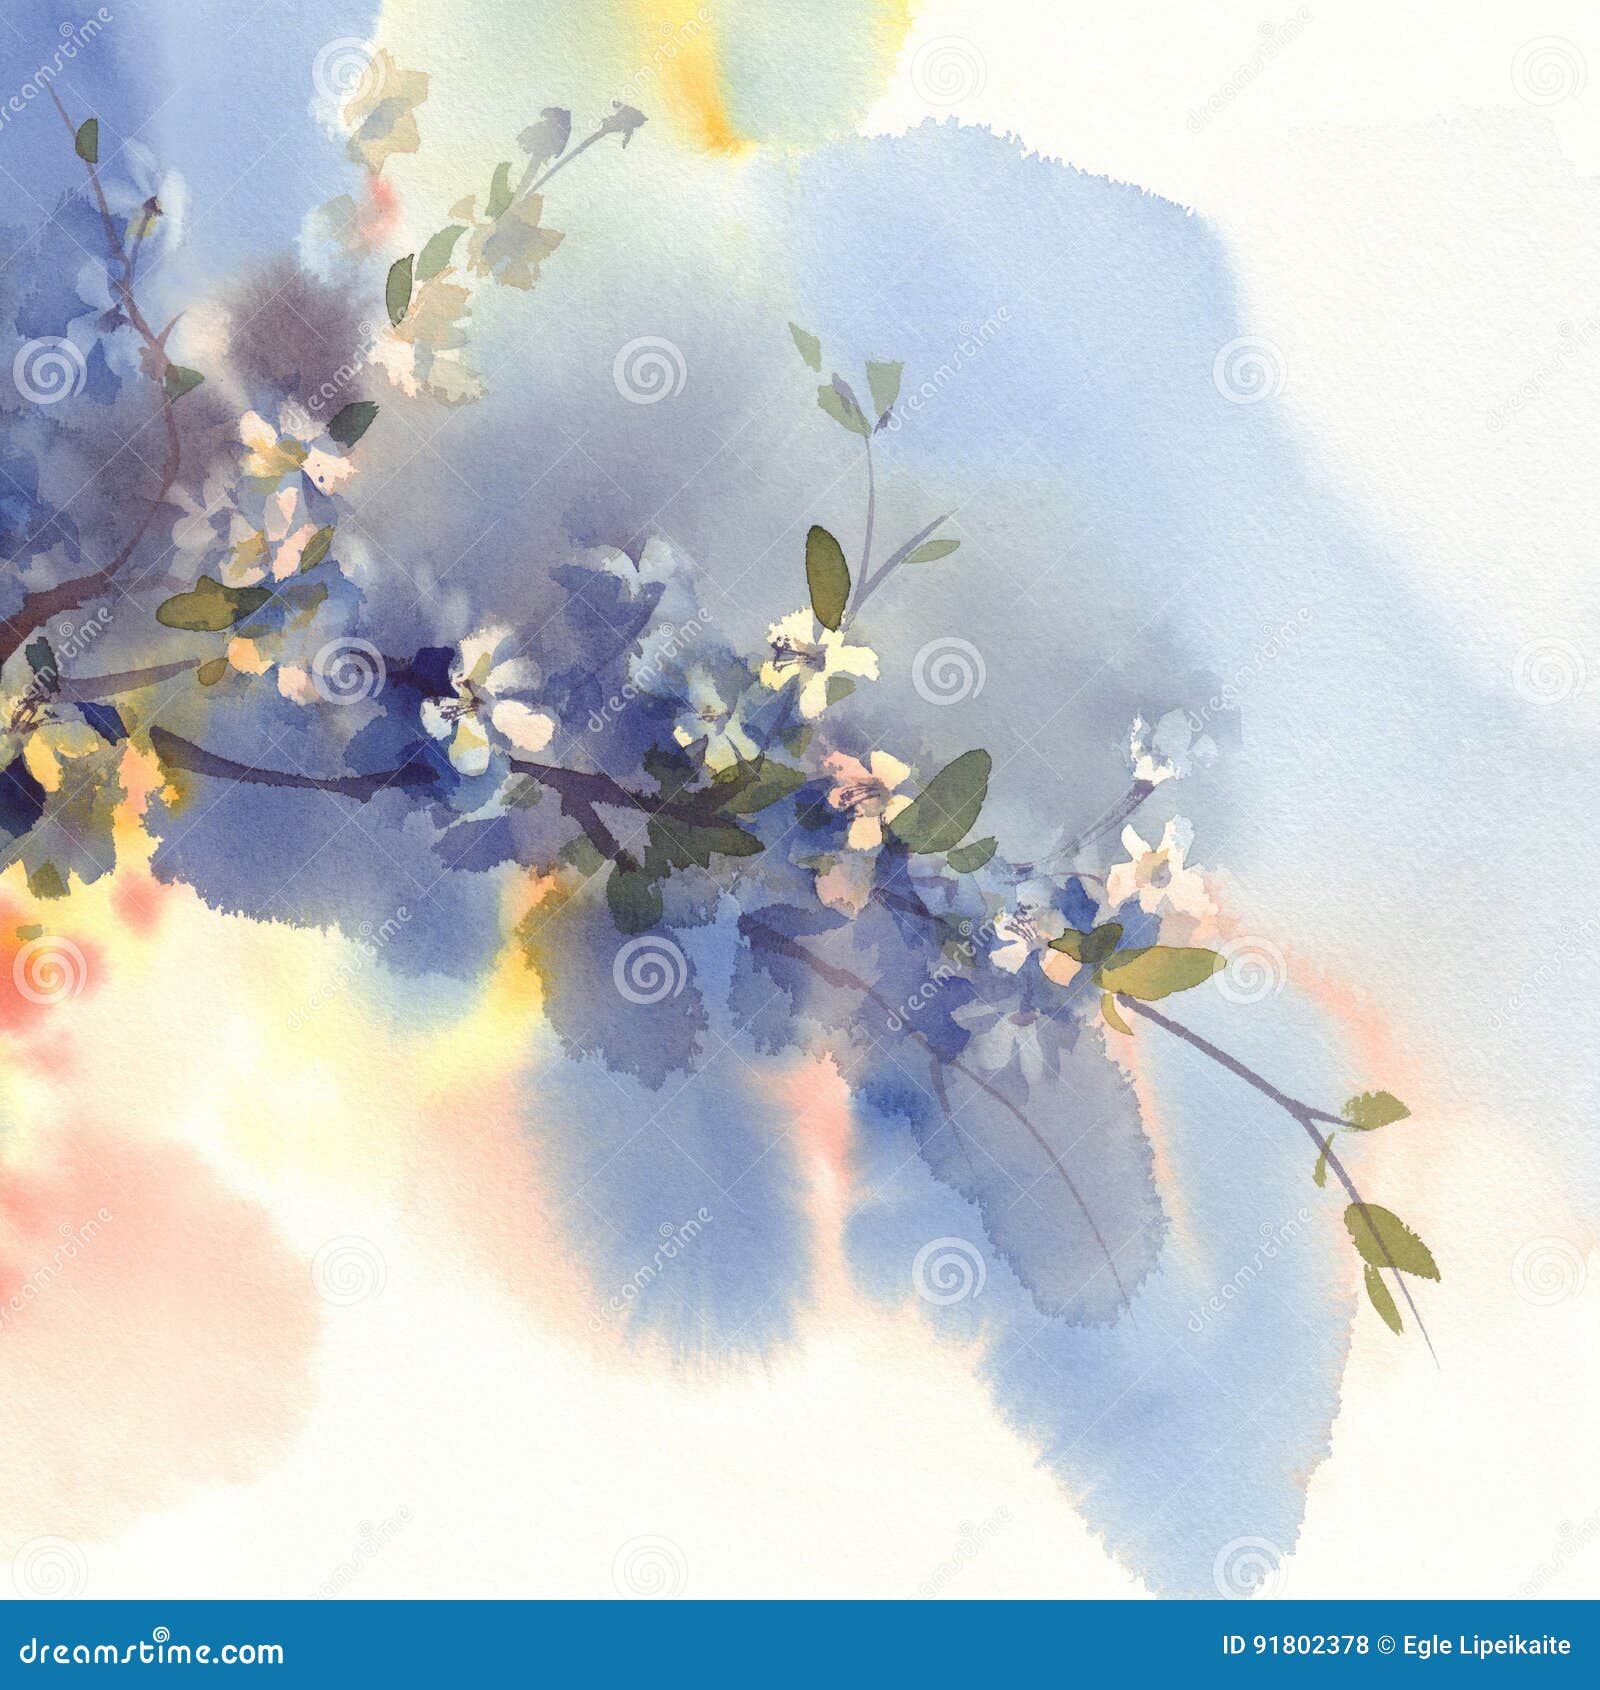 sakura branches in bloom watercolor background